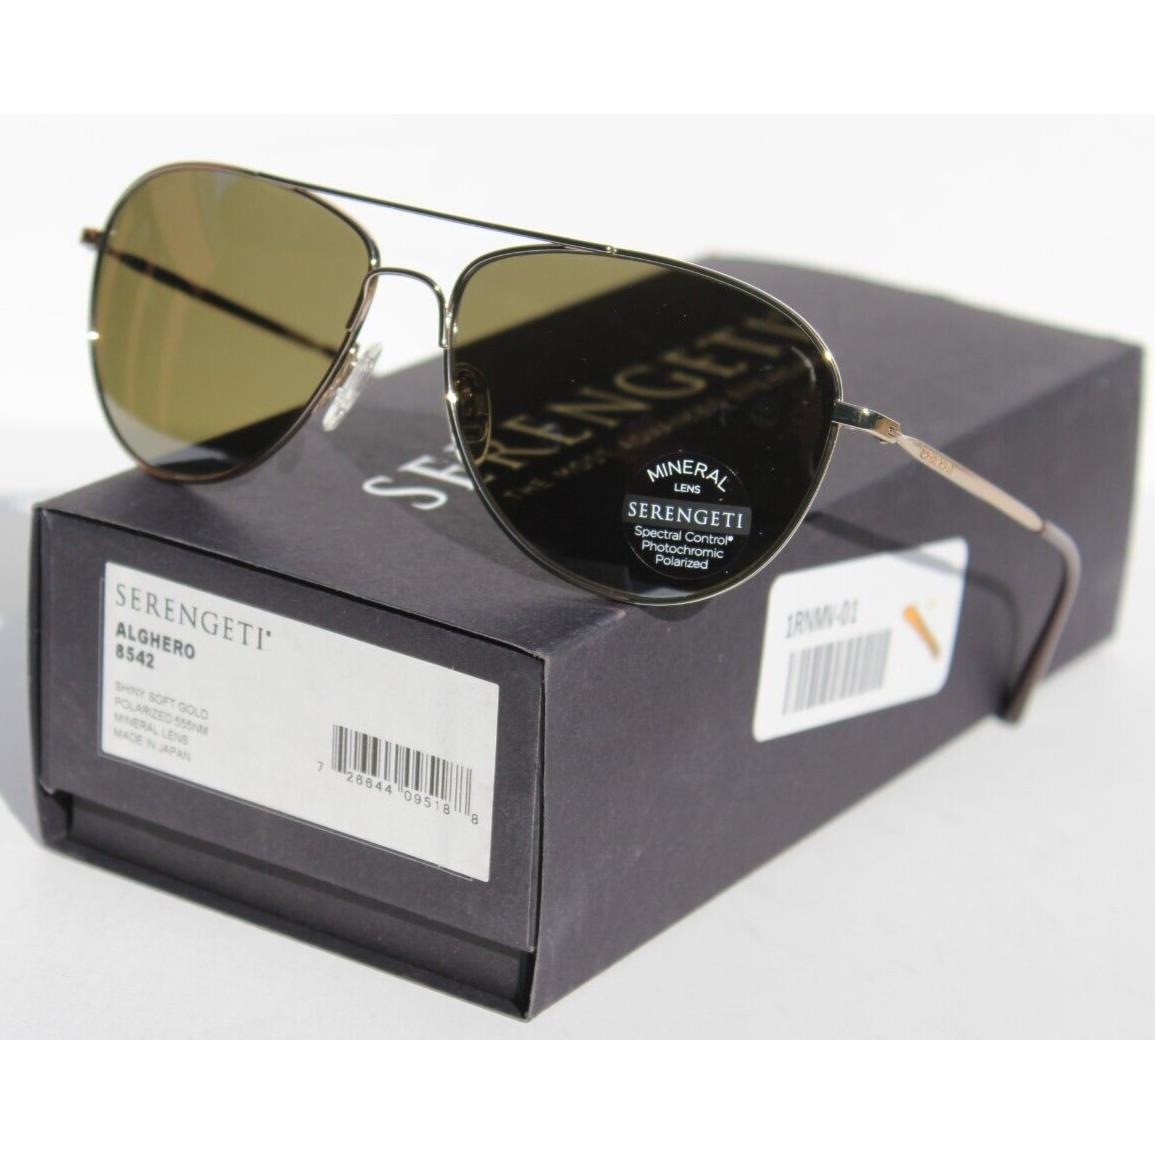 Serengeti Alghero Polarized Sunglasses Shiny Soft Gold/555nm 8542 Japan